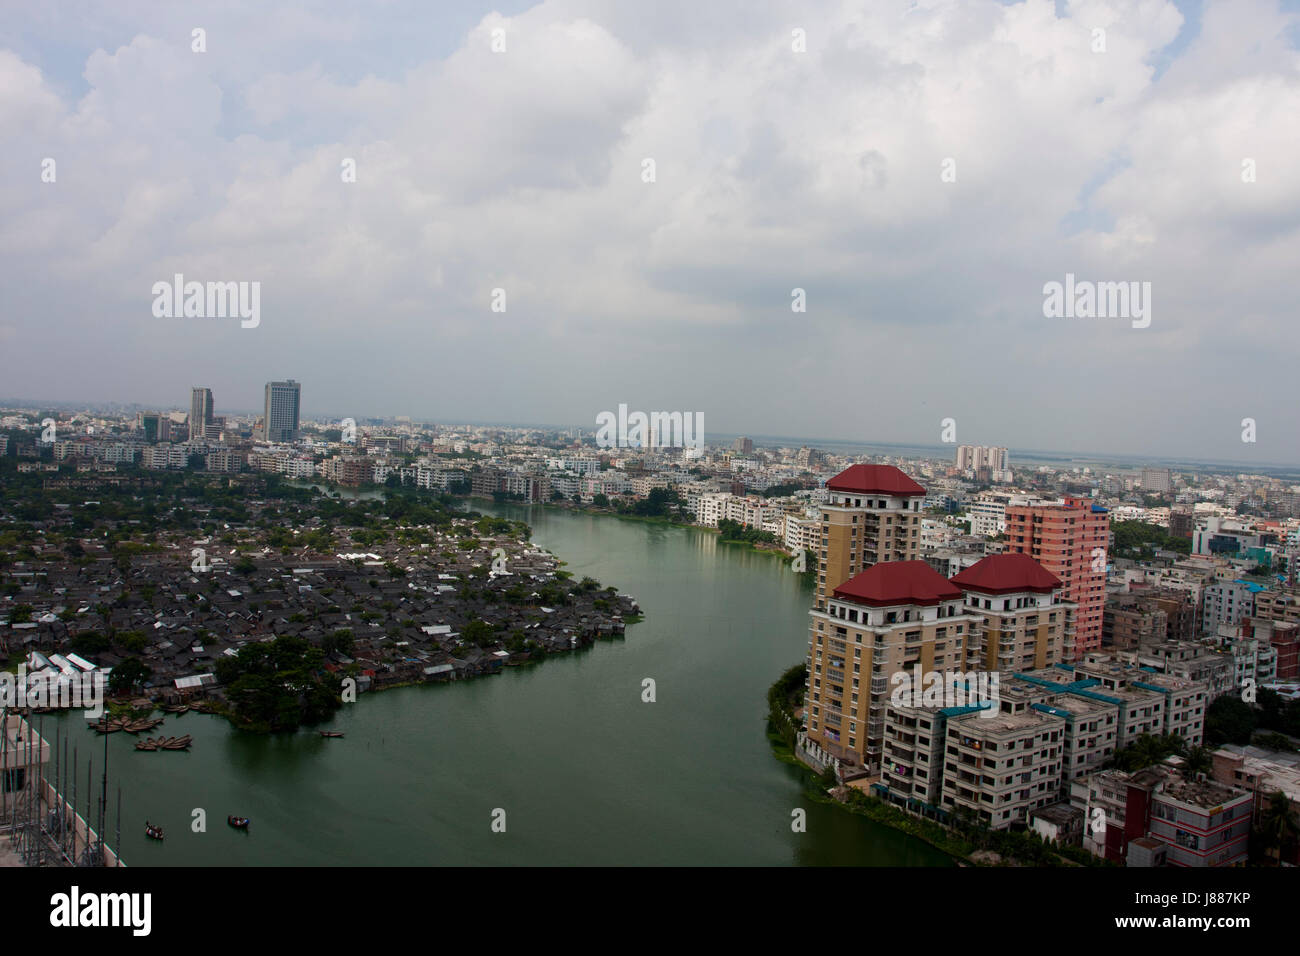 An aerial view of Gulshan area in Dhaka city, Bangladesh. Stock Photo